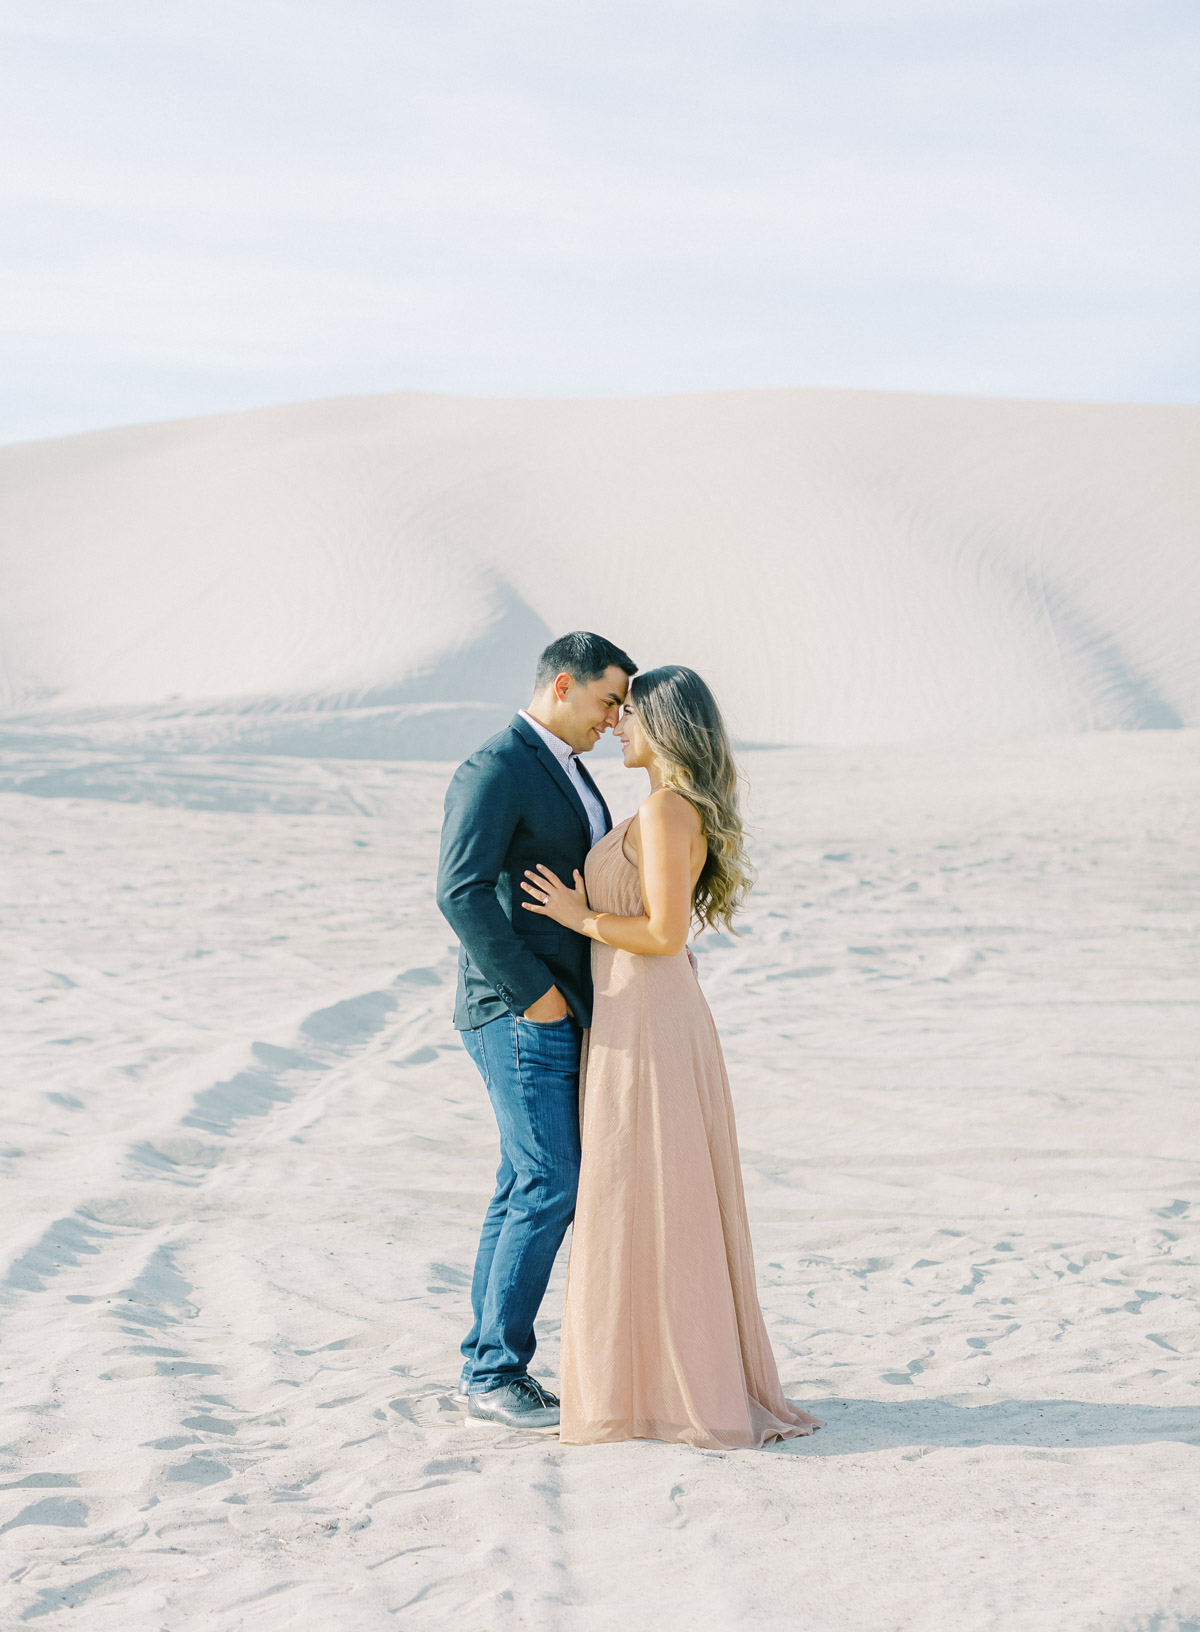 Best ever Sand dunes engagement photos